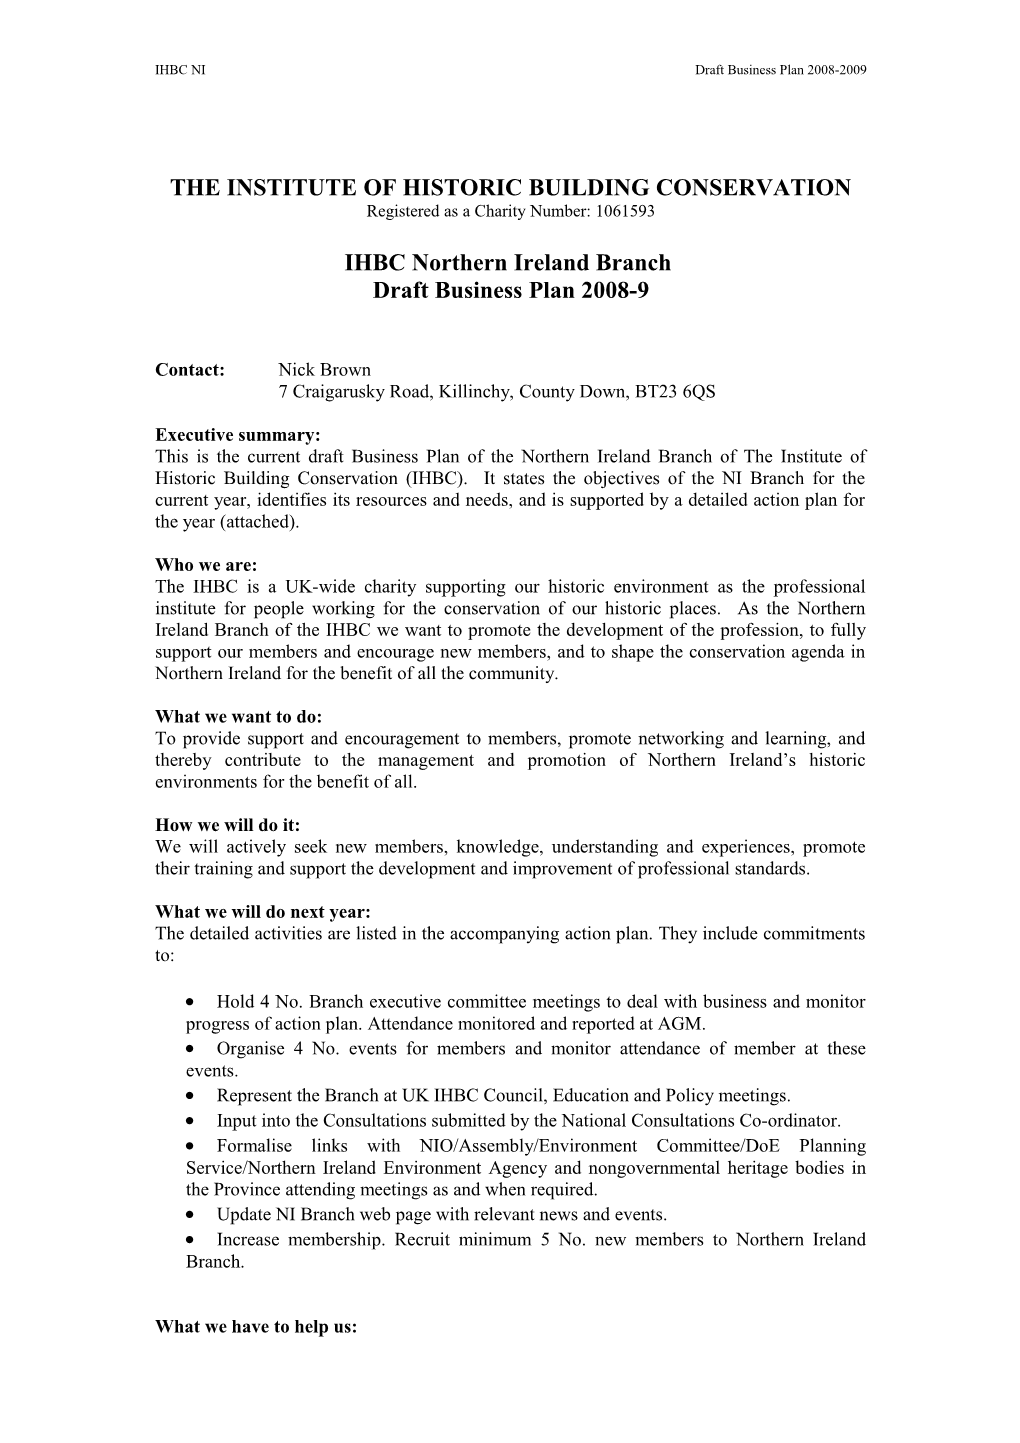 IHBC Business Plan Background